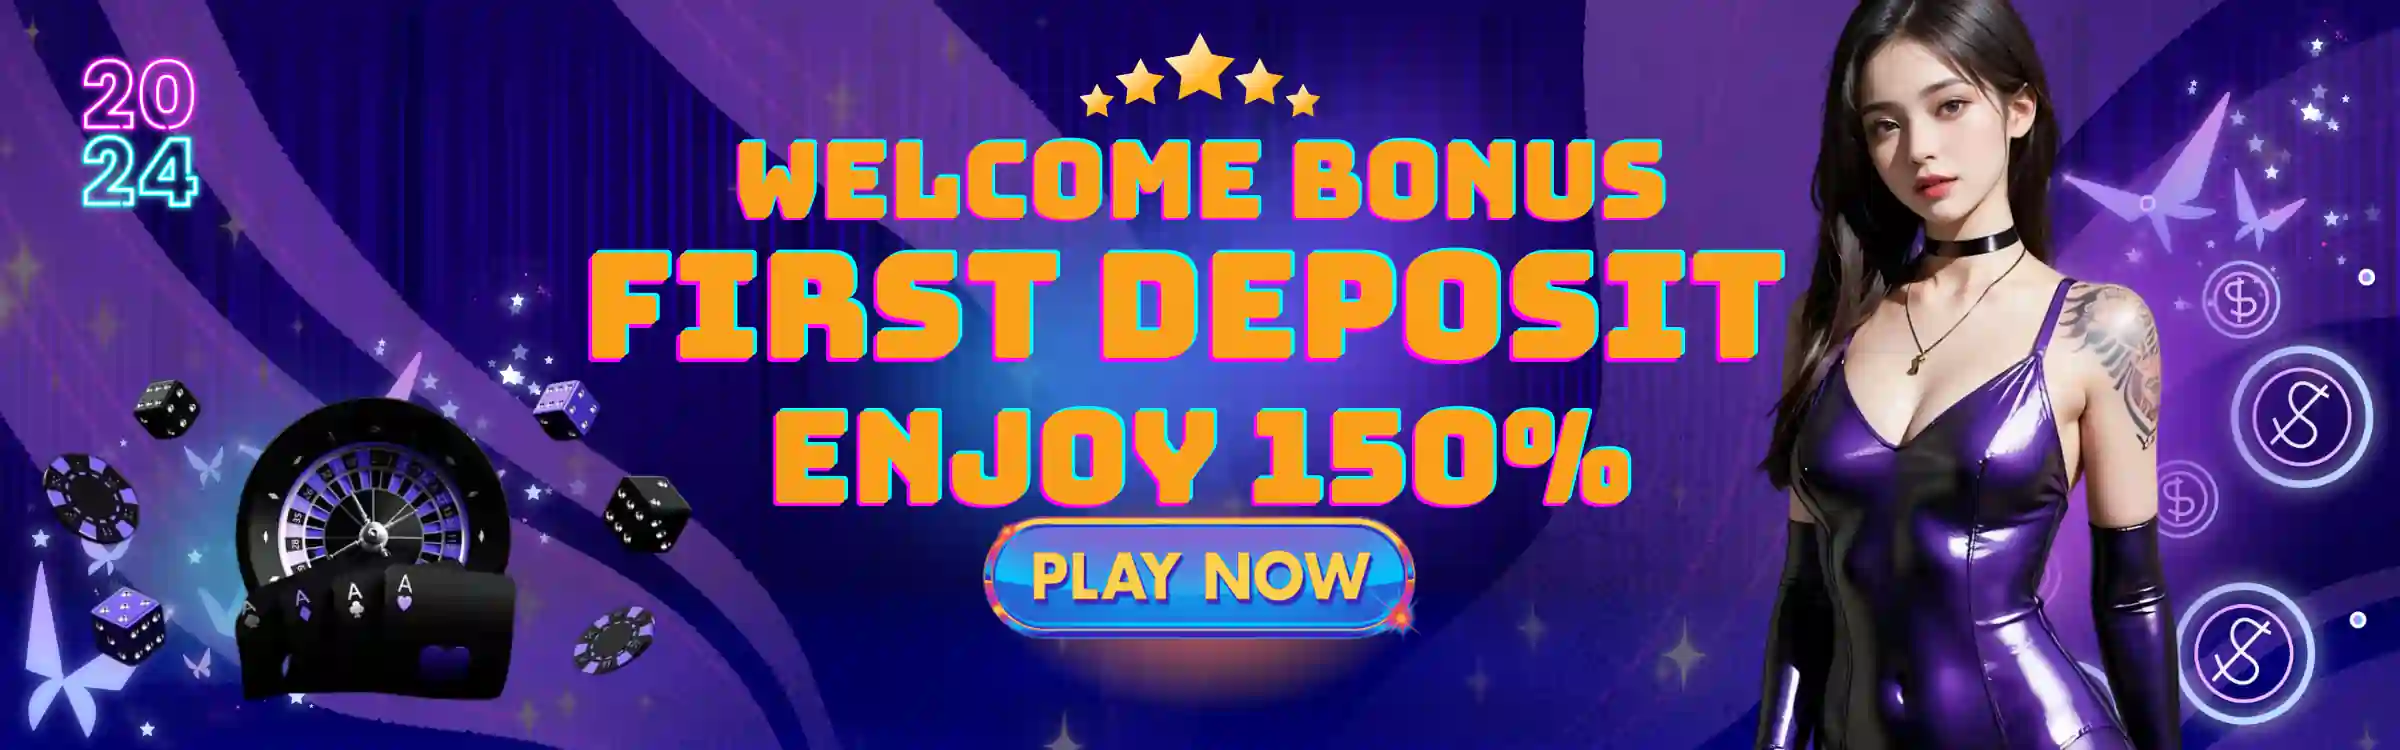 welcome bonus 150%